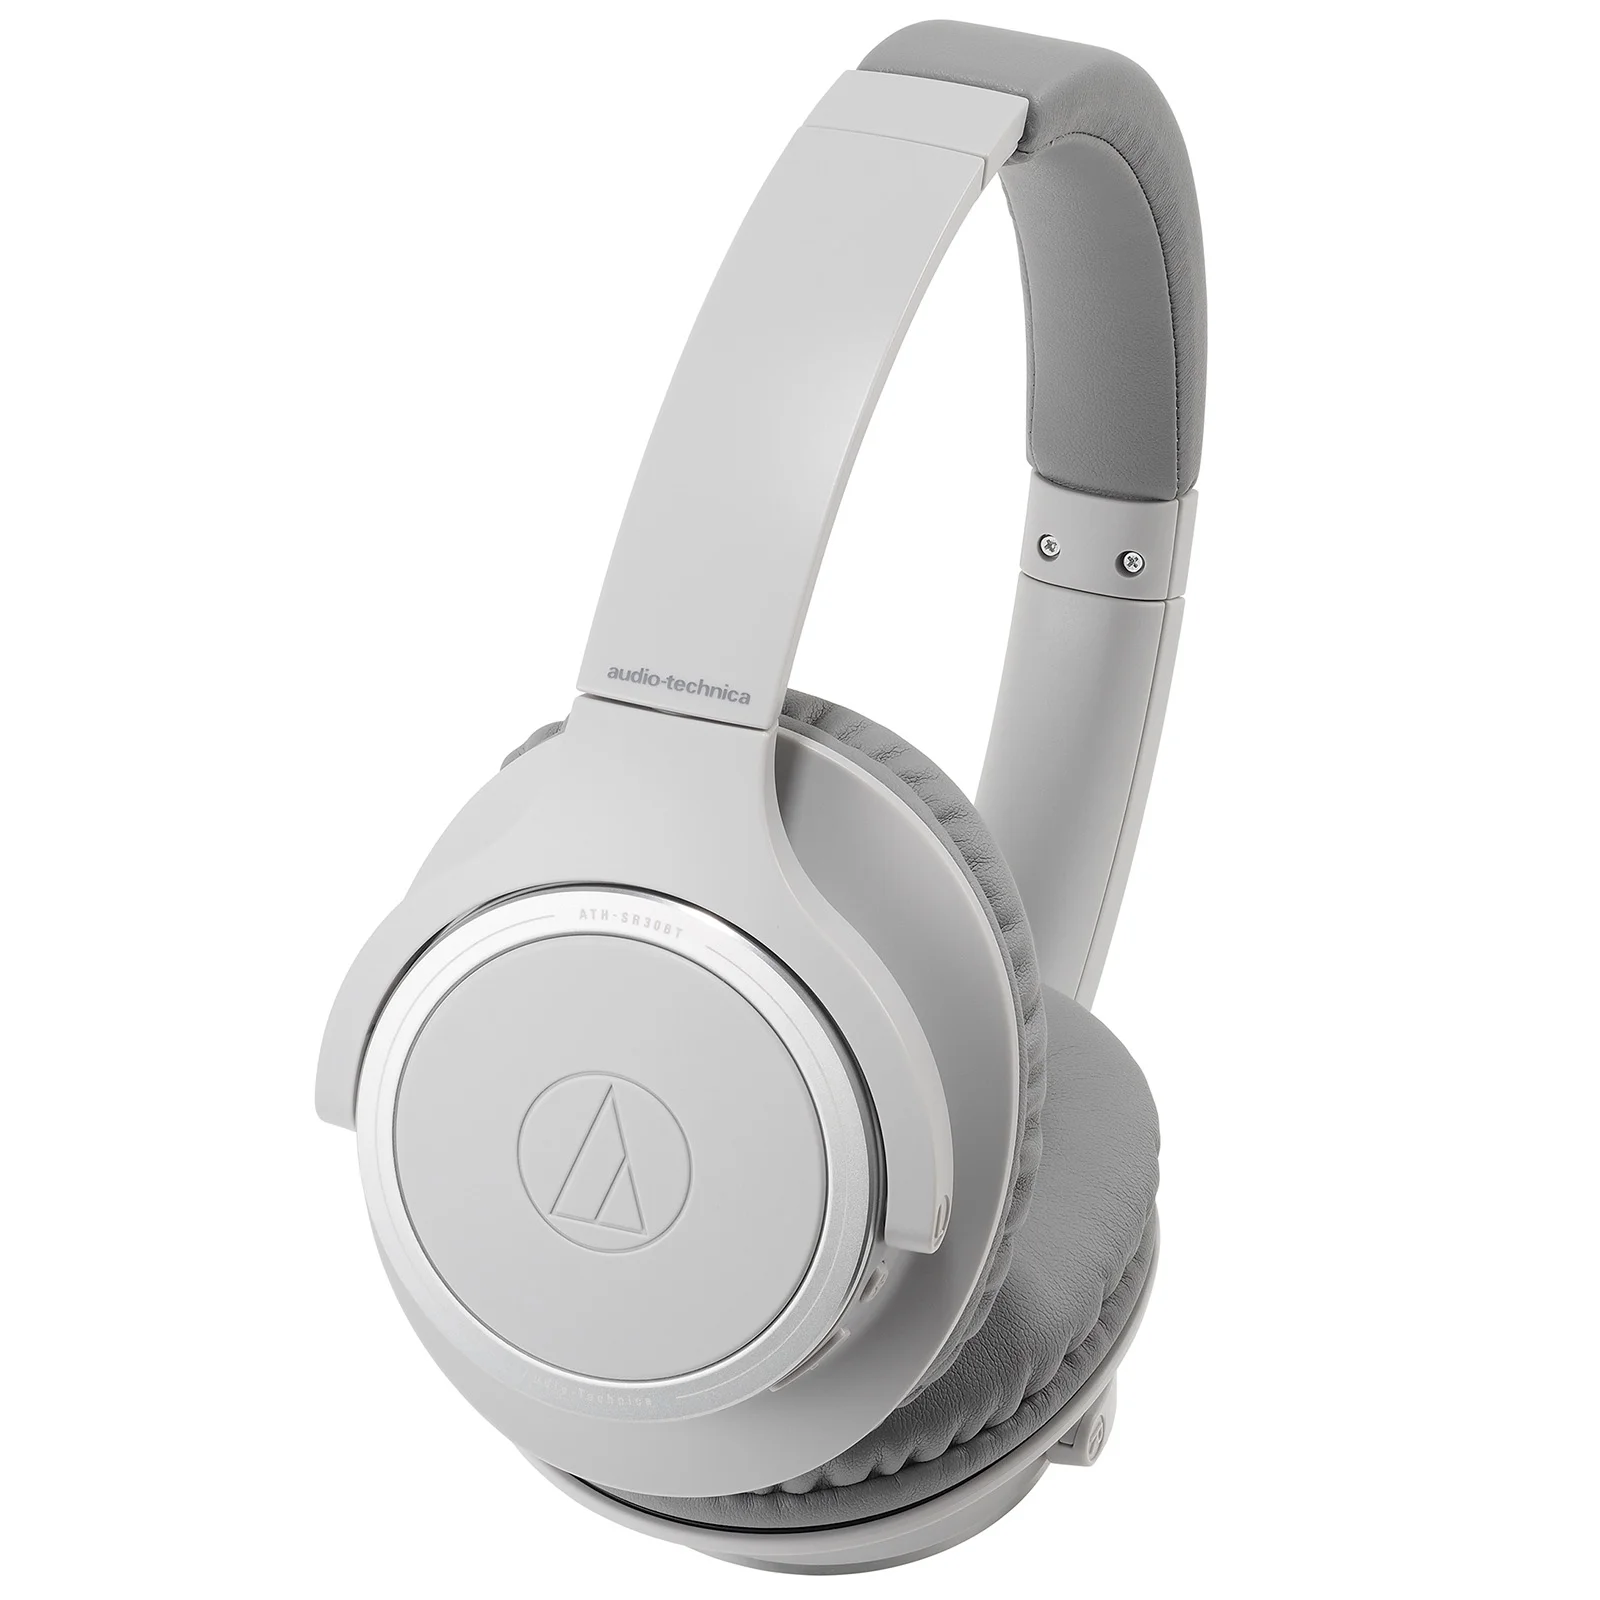 Audio Technica ATH-SR30BTGY Wireless Bluetooth Headphones - Grey Image 1